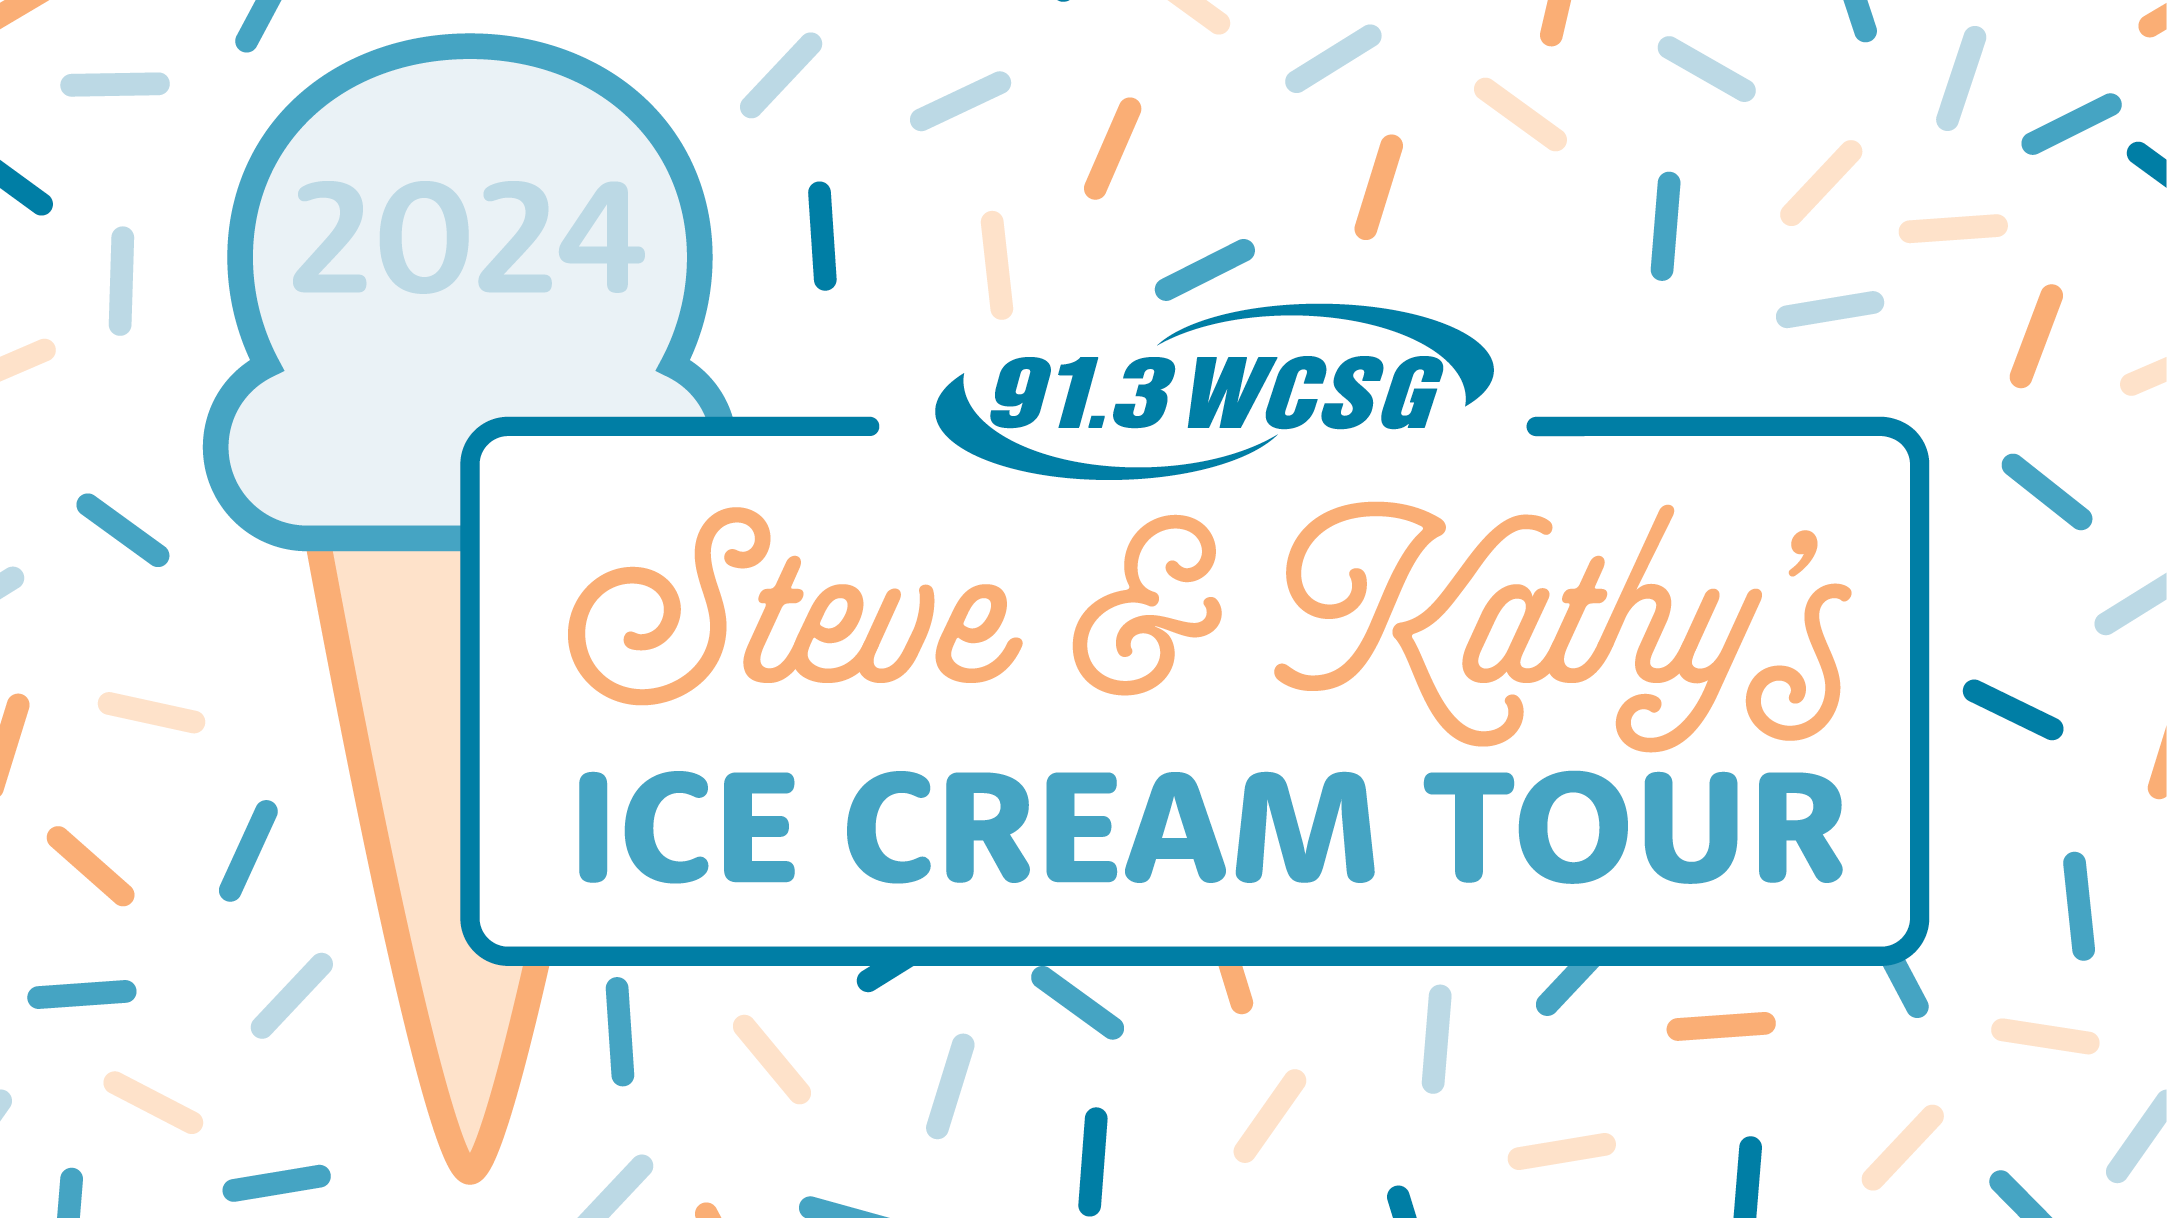 Steve & Kathy's Ice Cream Tour